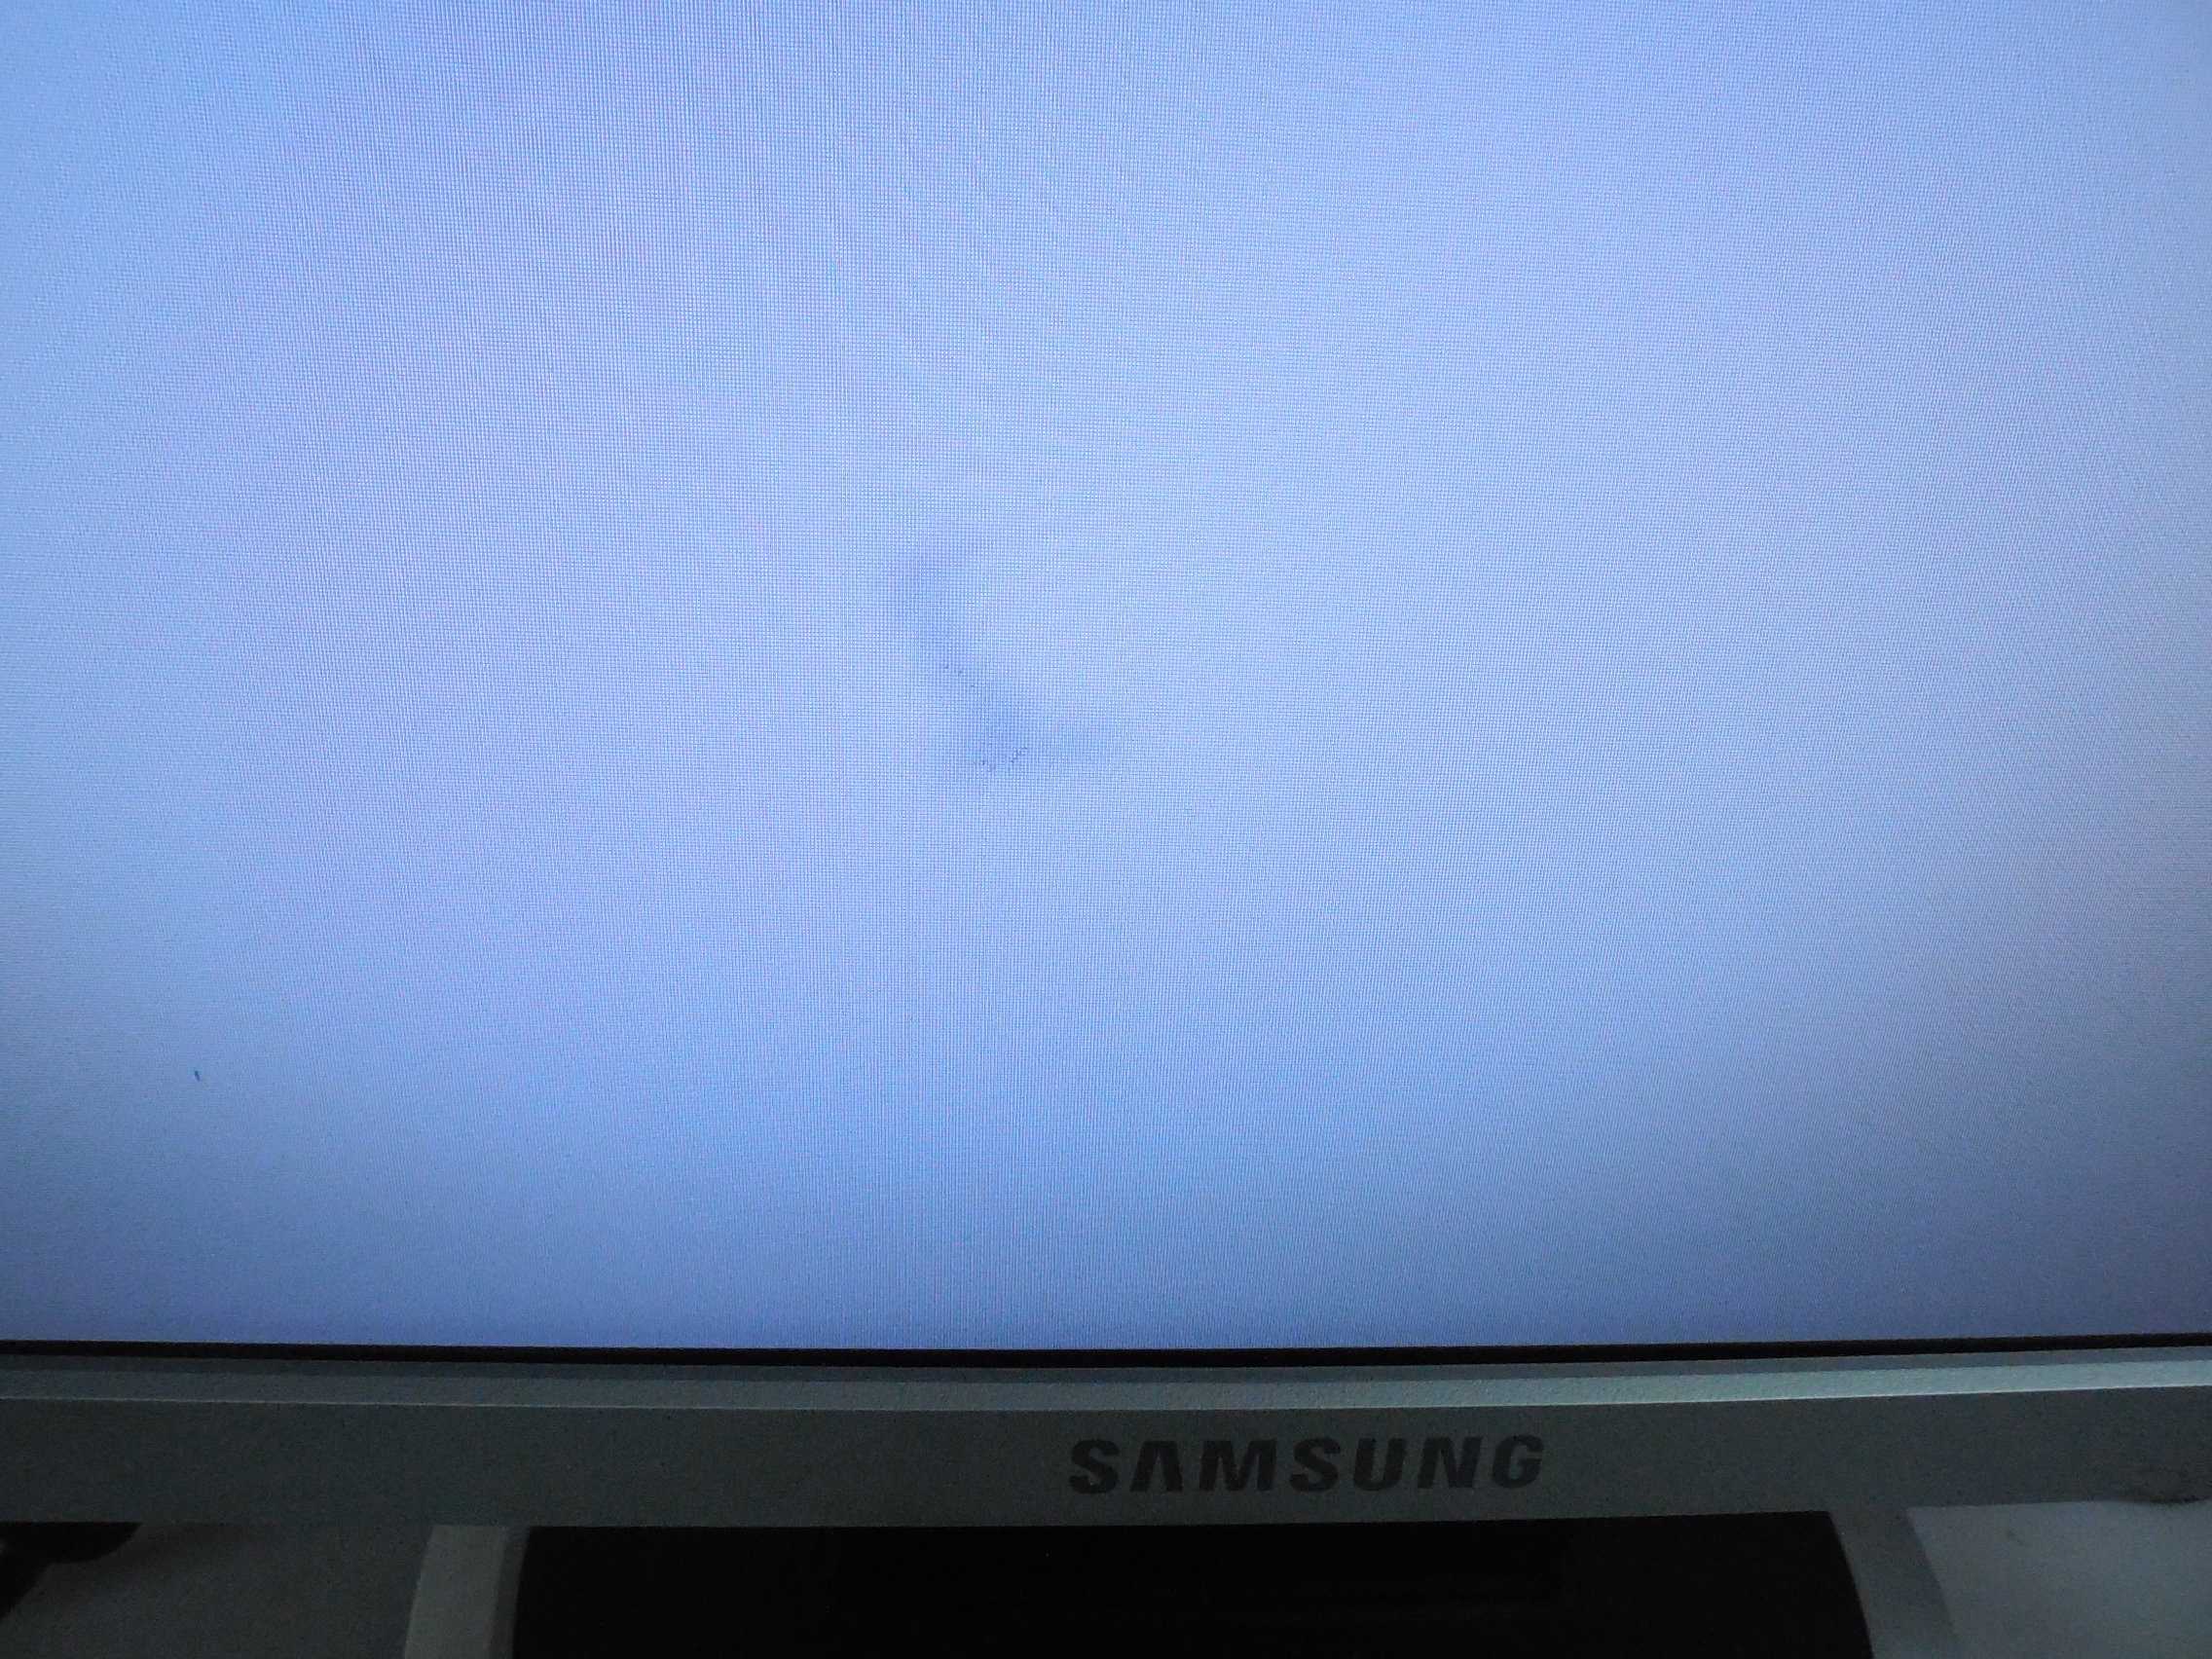 Самсунг телевизоры потемнел экран. Пятна самсунг 32 дюйма. Телевизор самсунг ЖК темное пятно ЖК матрица телевизора. Пятна на матрице телевизора Samsung. Темные пятна на телевизоре Samsung.